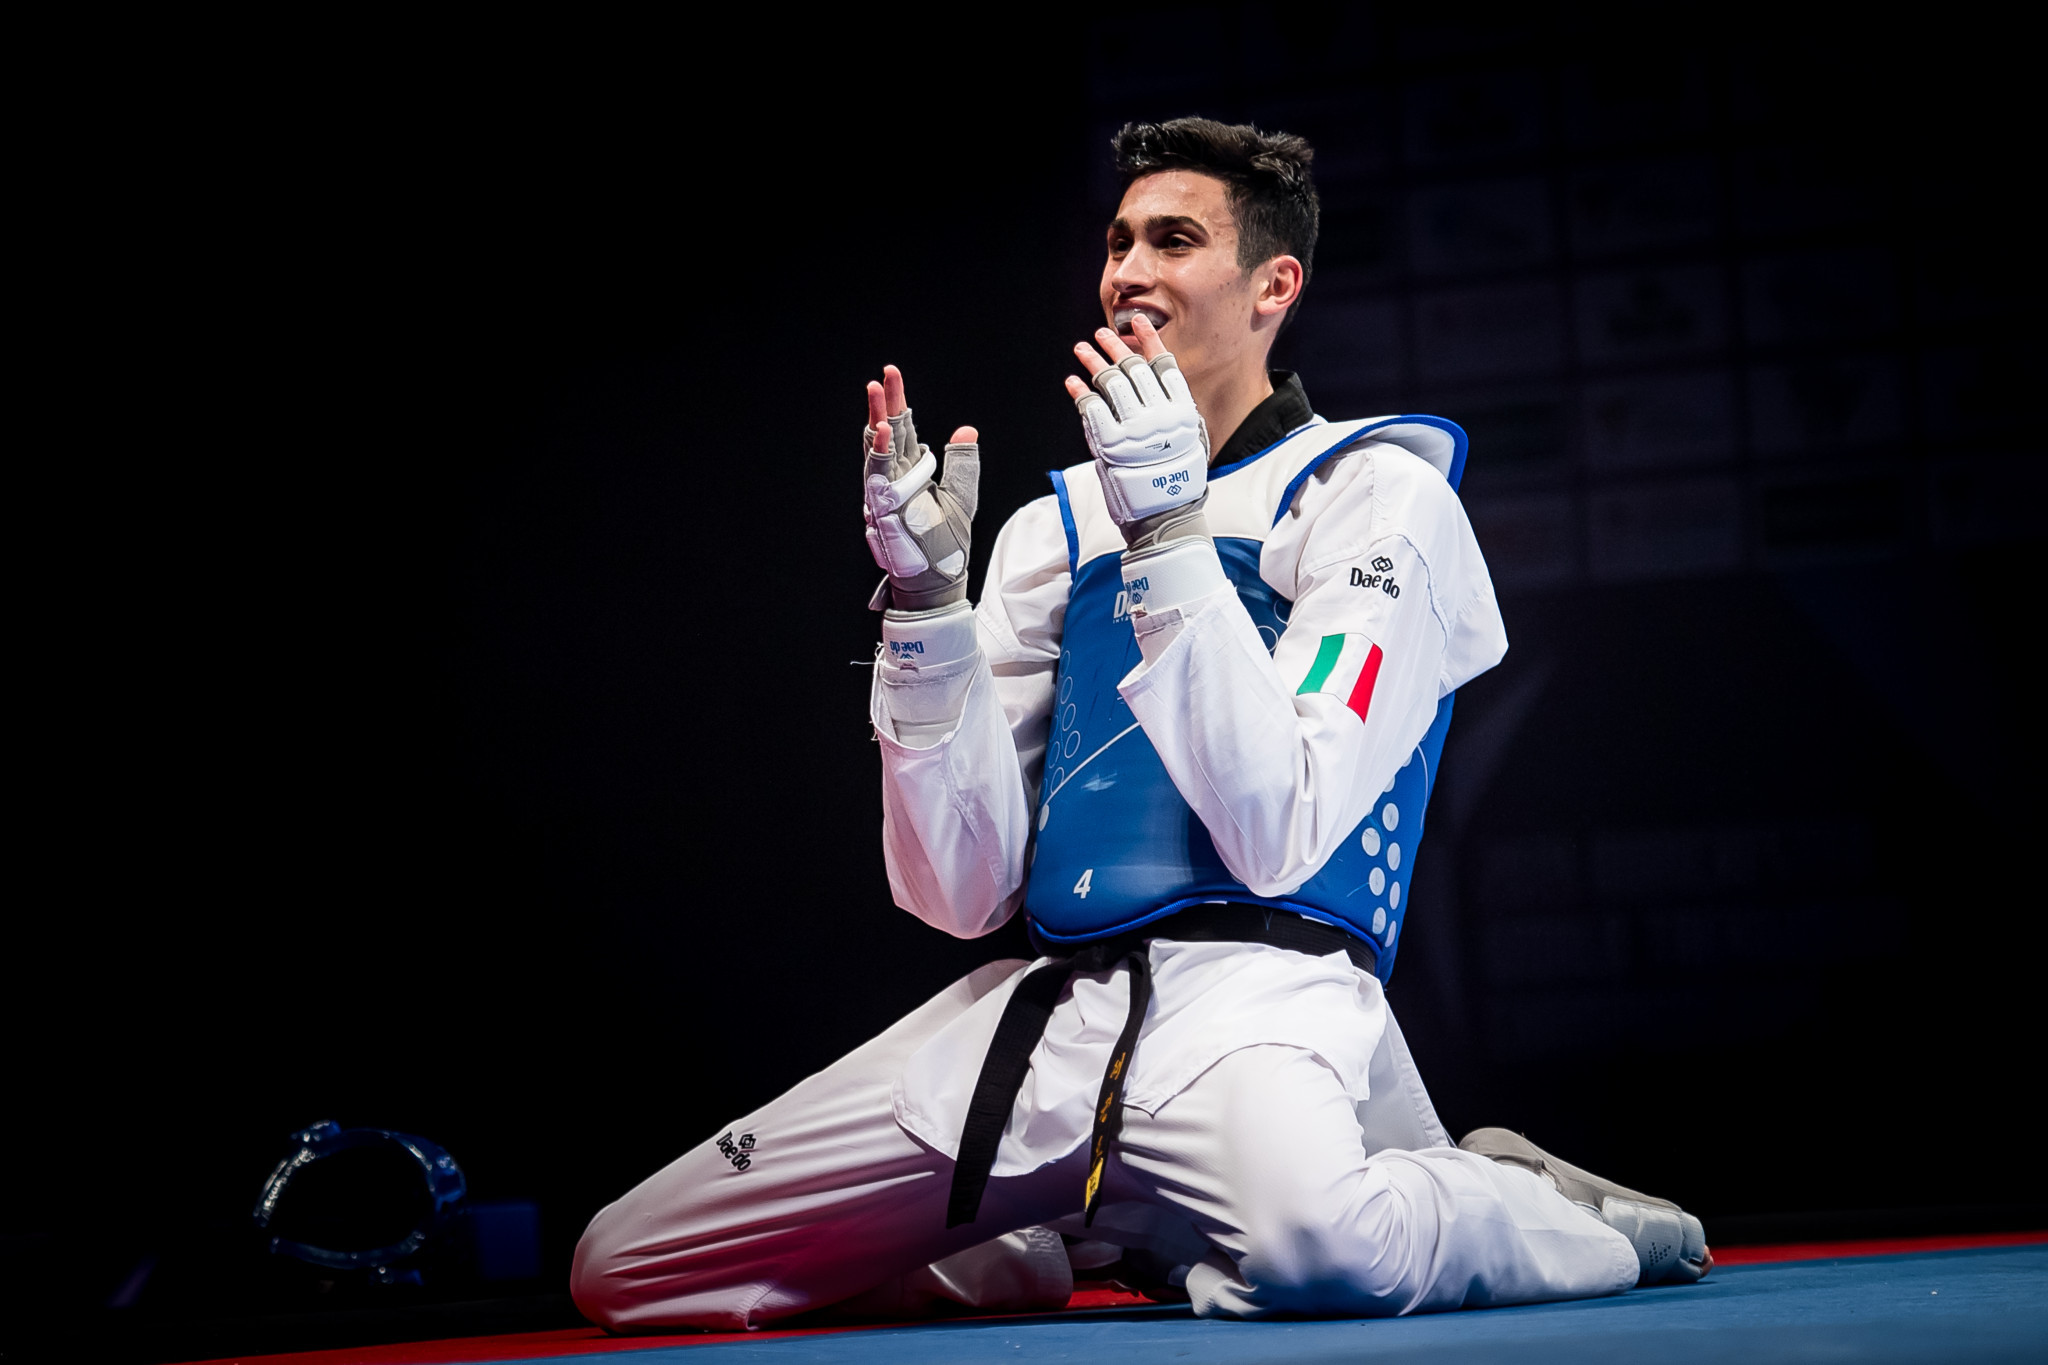 Simone Alessio claimed the men's under-74kg title at the 2019 World Taekwondo Championships in Manchester ©World Taekwondo